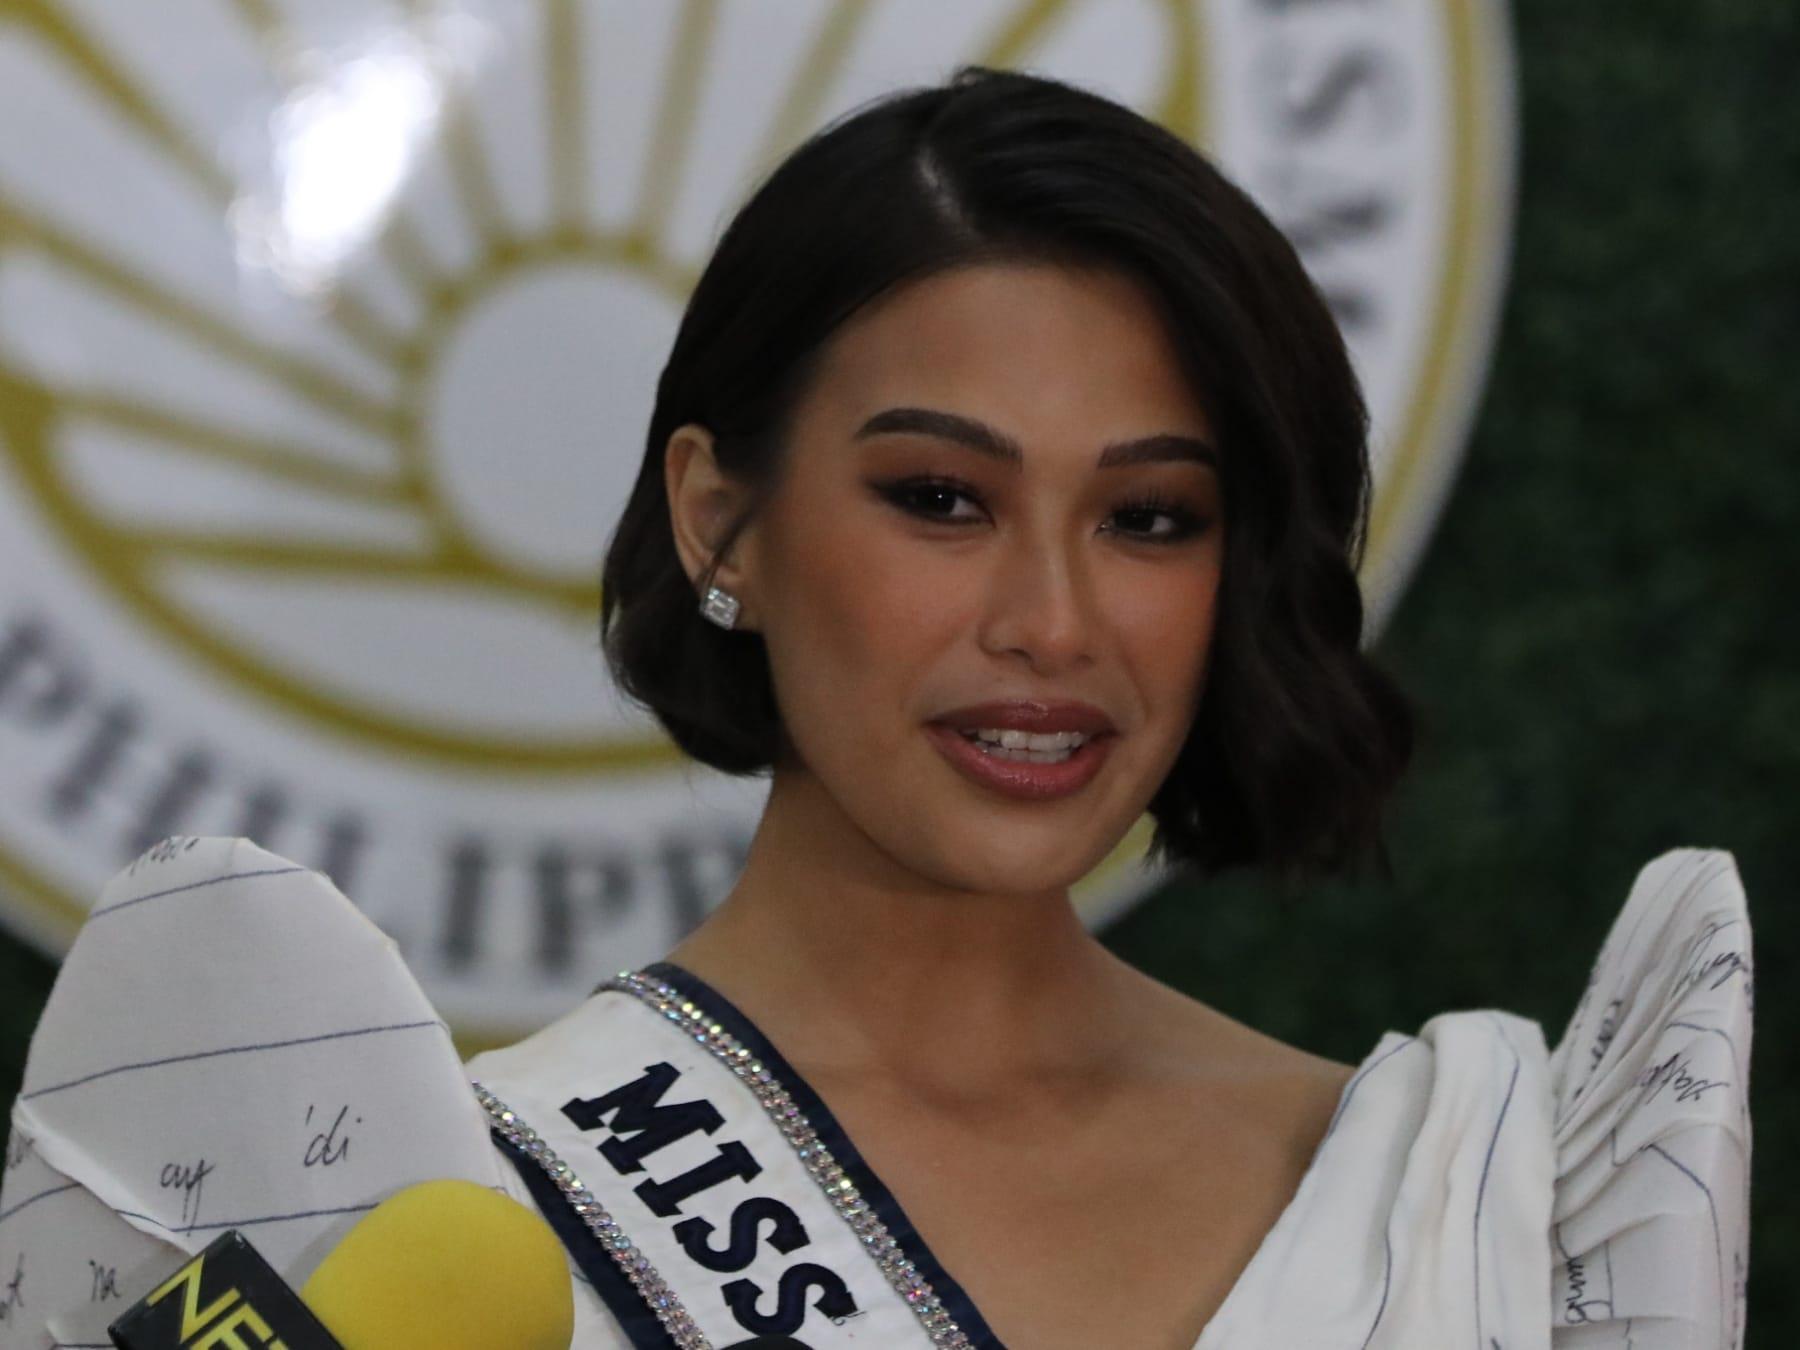 Miss Universe Philippines 2023 Michelle Dee